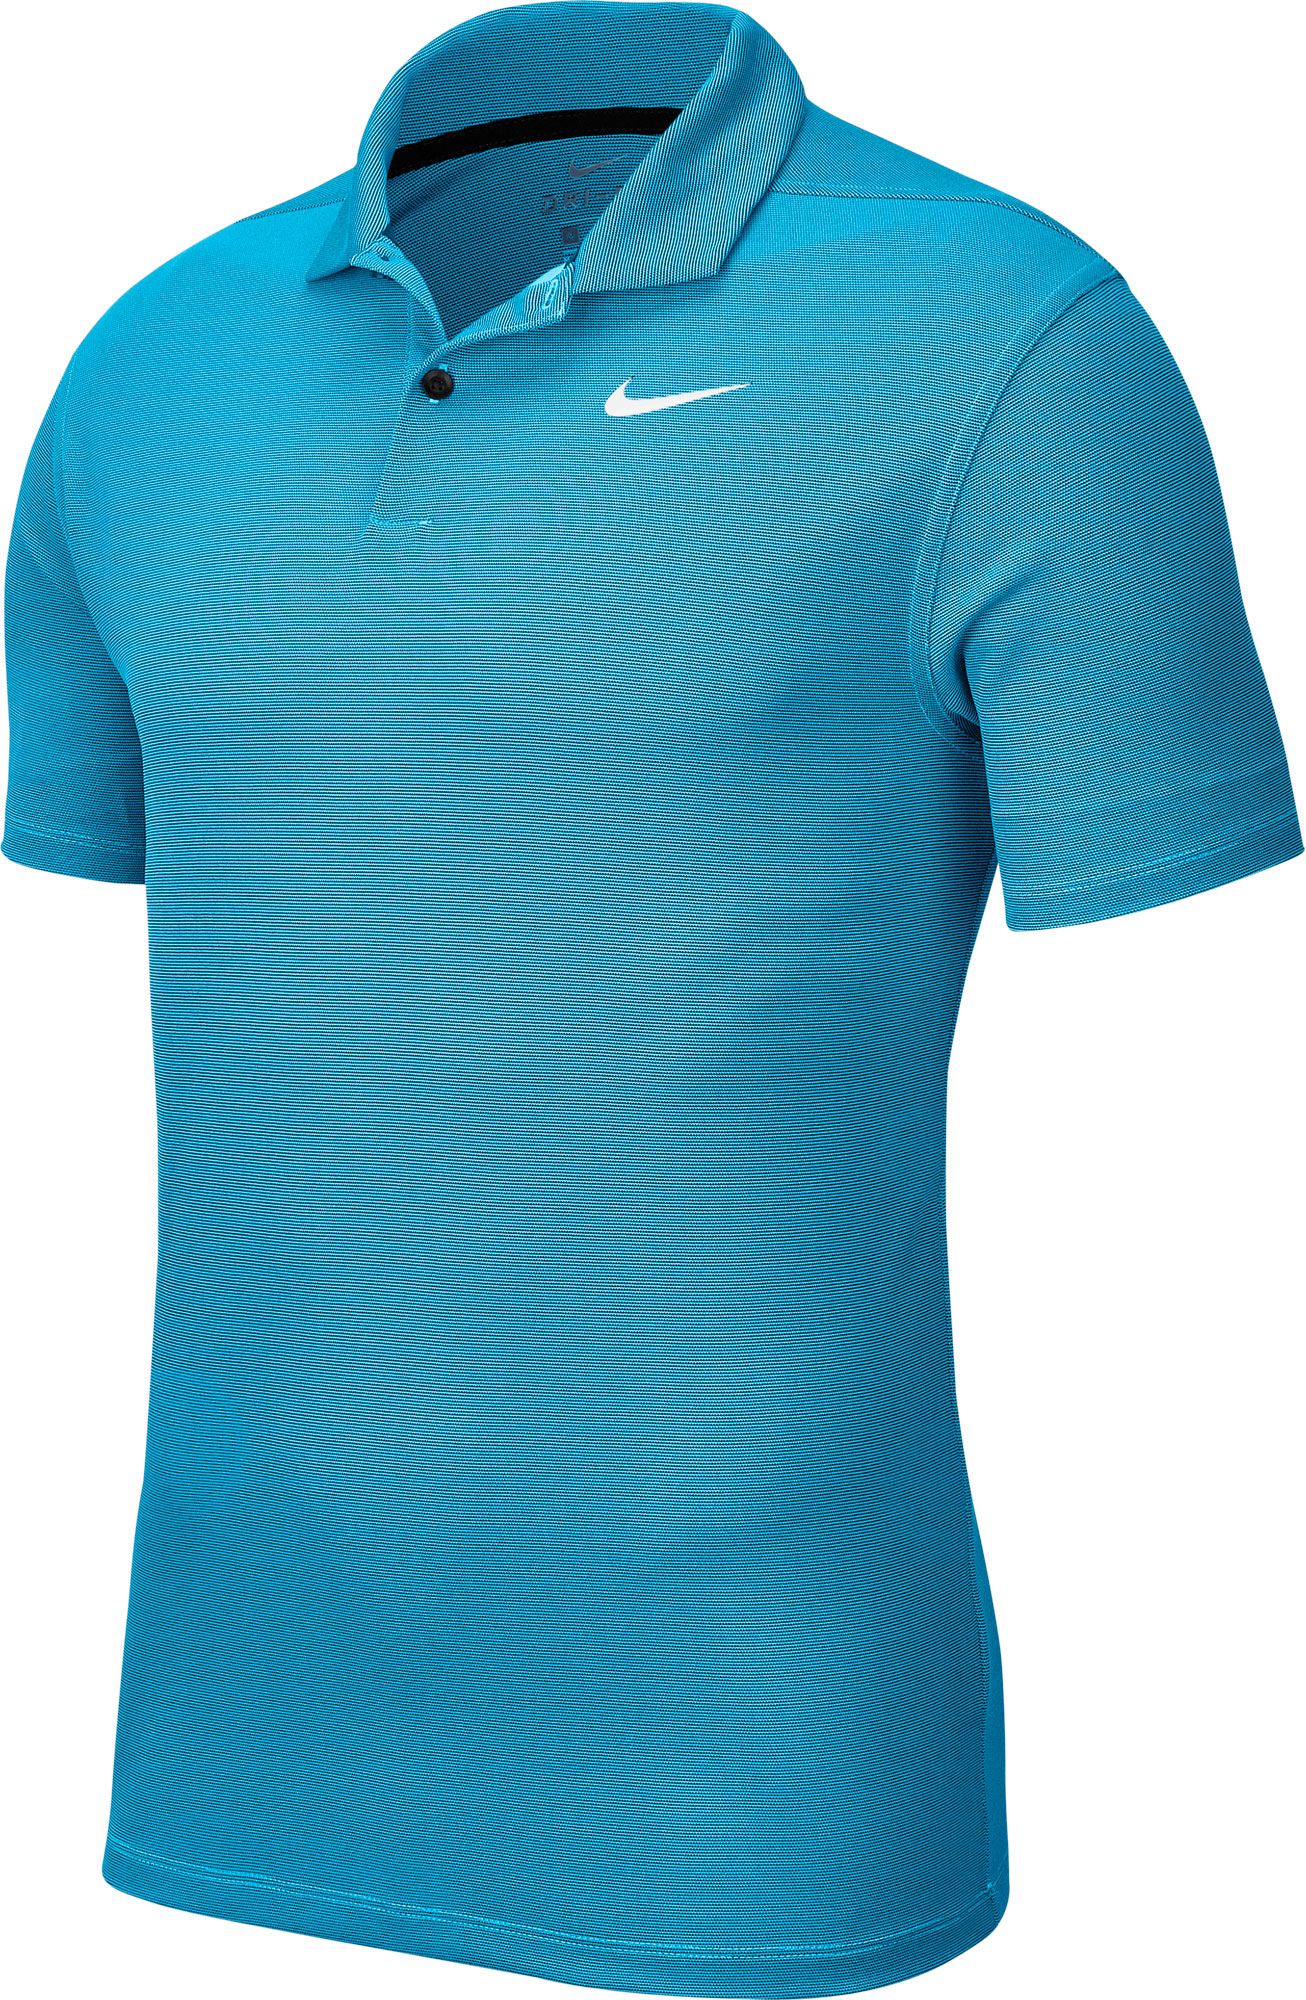 What is a Golf Shirt - Nike Golf Polo